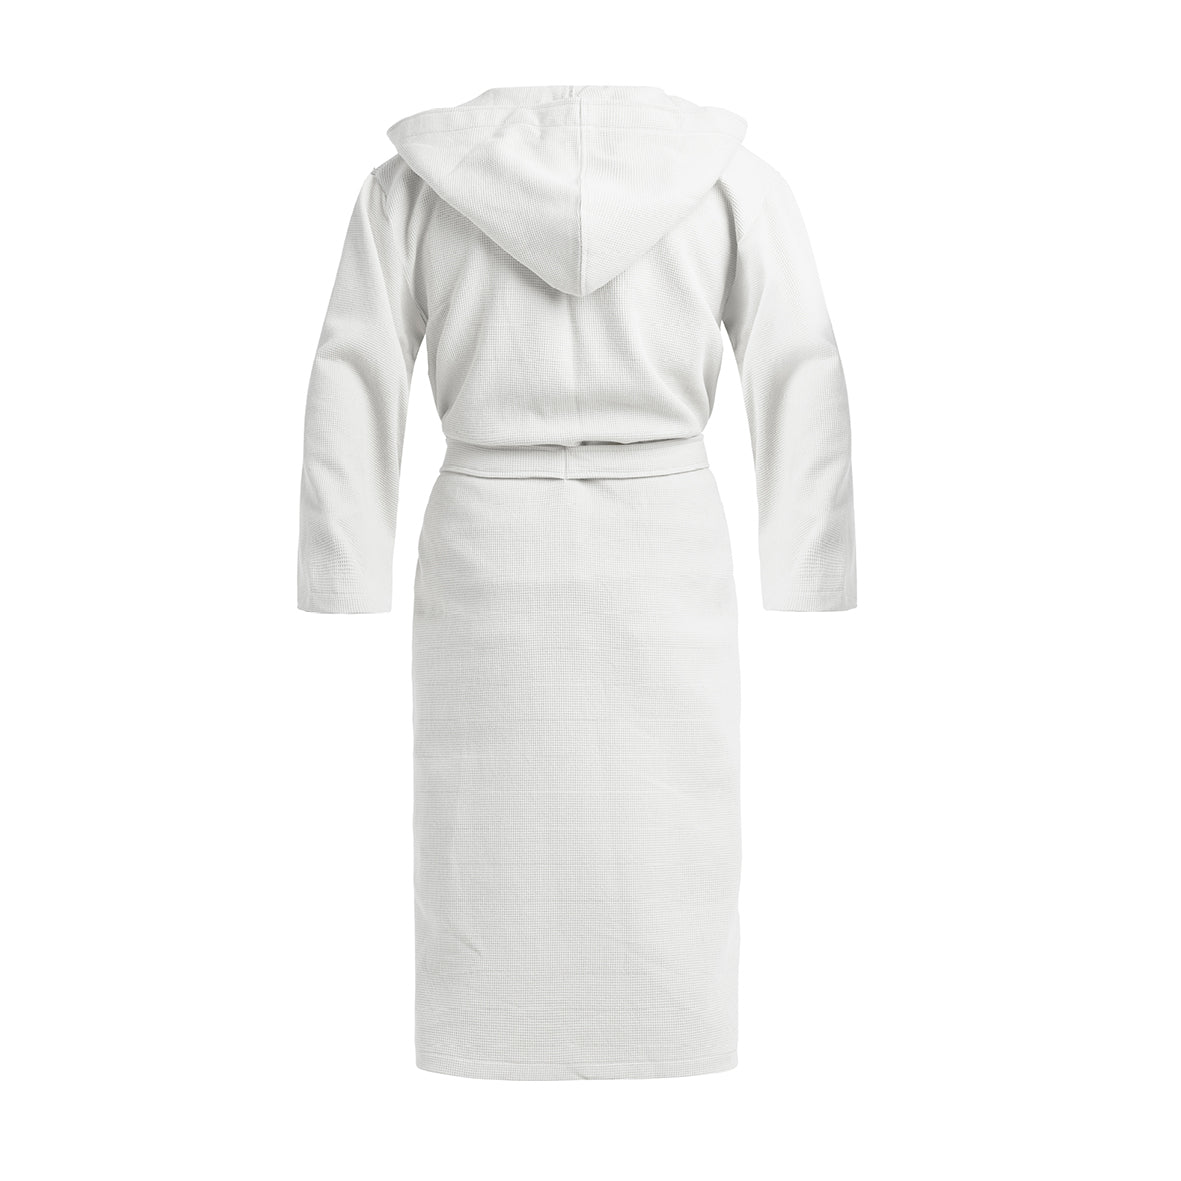 Hooded bathrobe Nid d'abeille - White